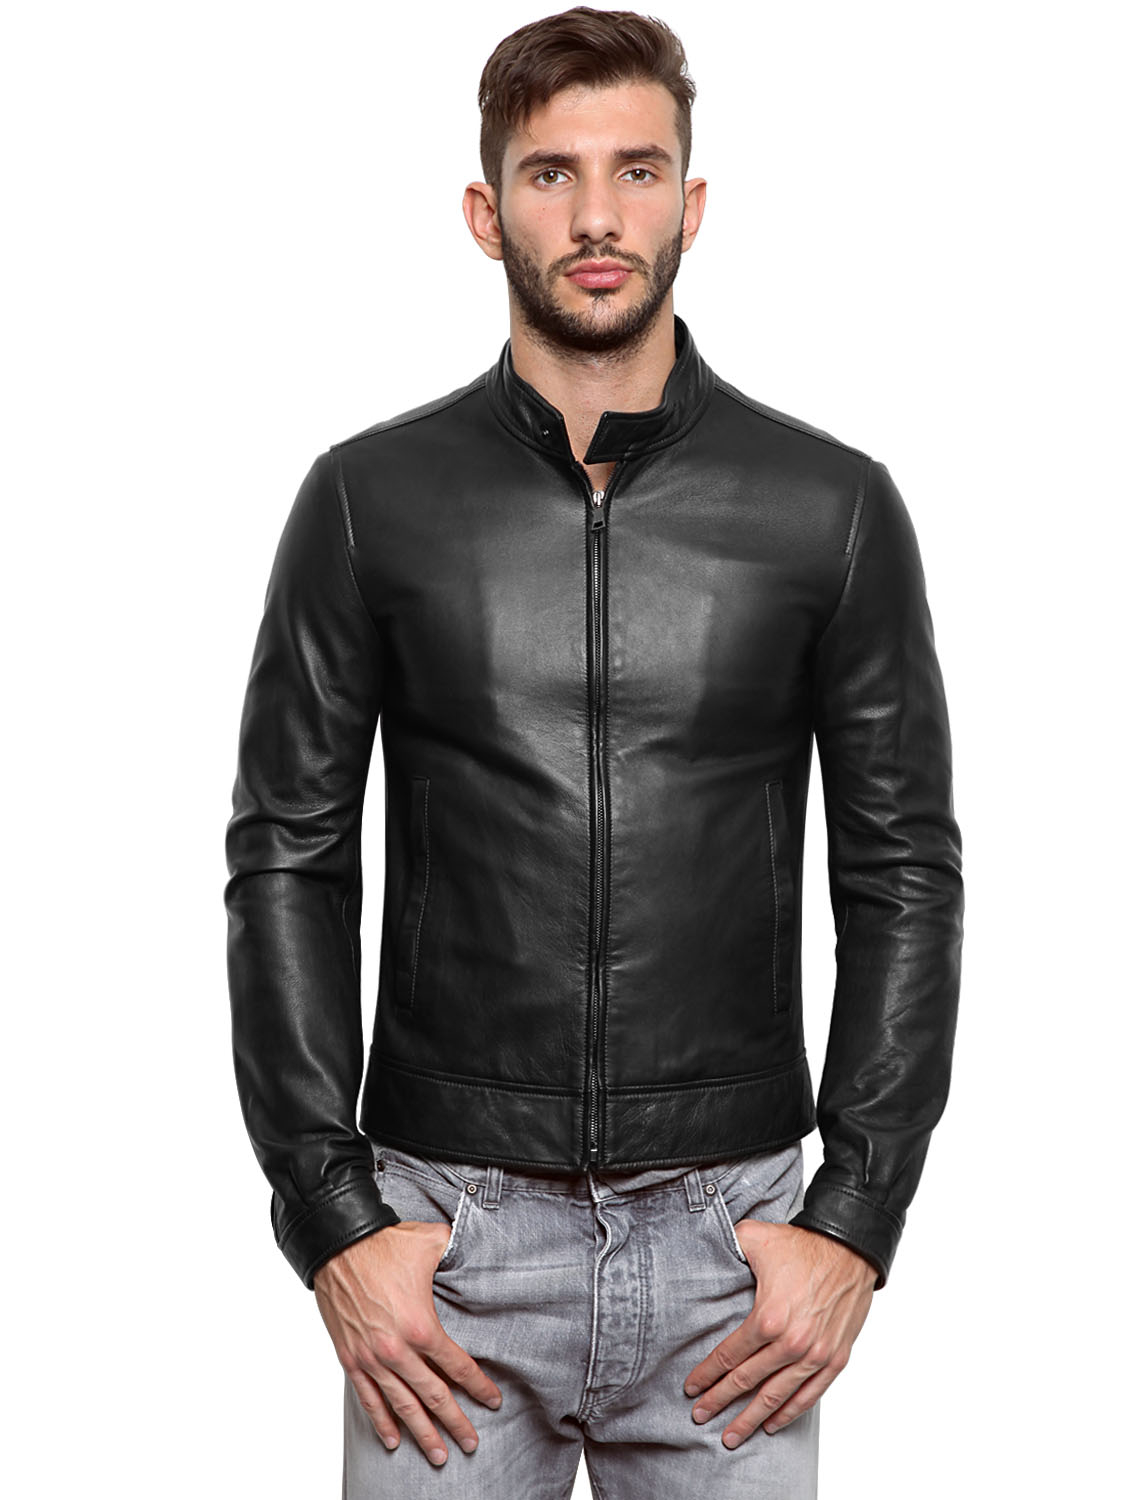 Dolce & Gabbana Nappa Leather Biker Jacket in Black for Men - Lyst